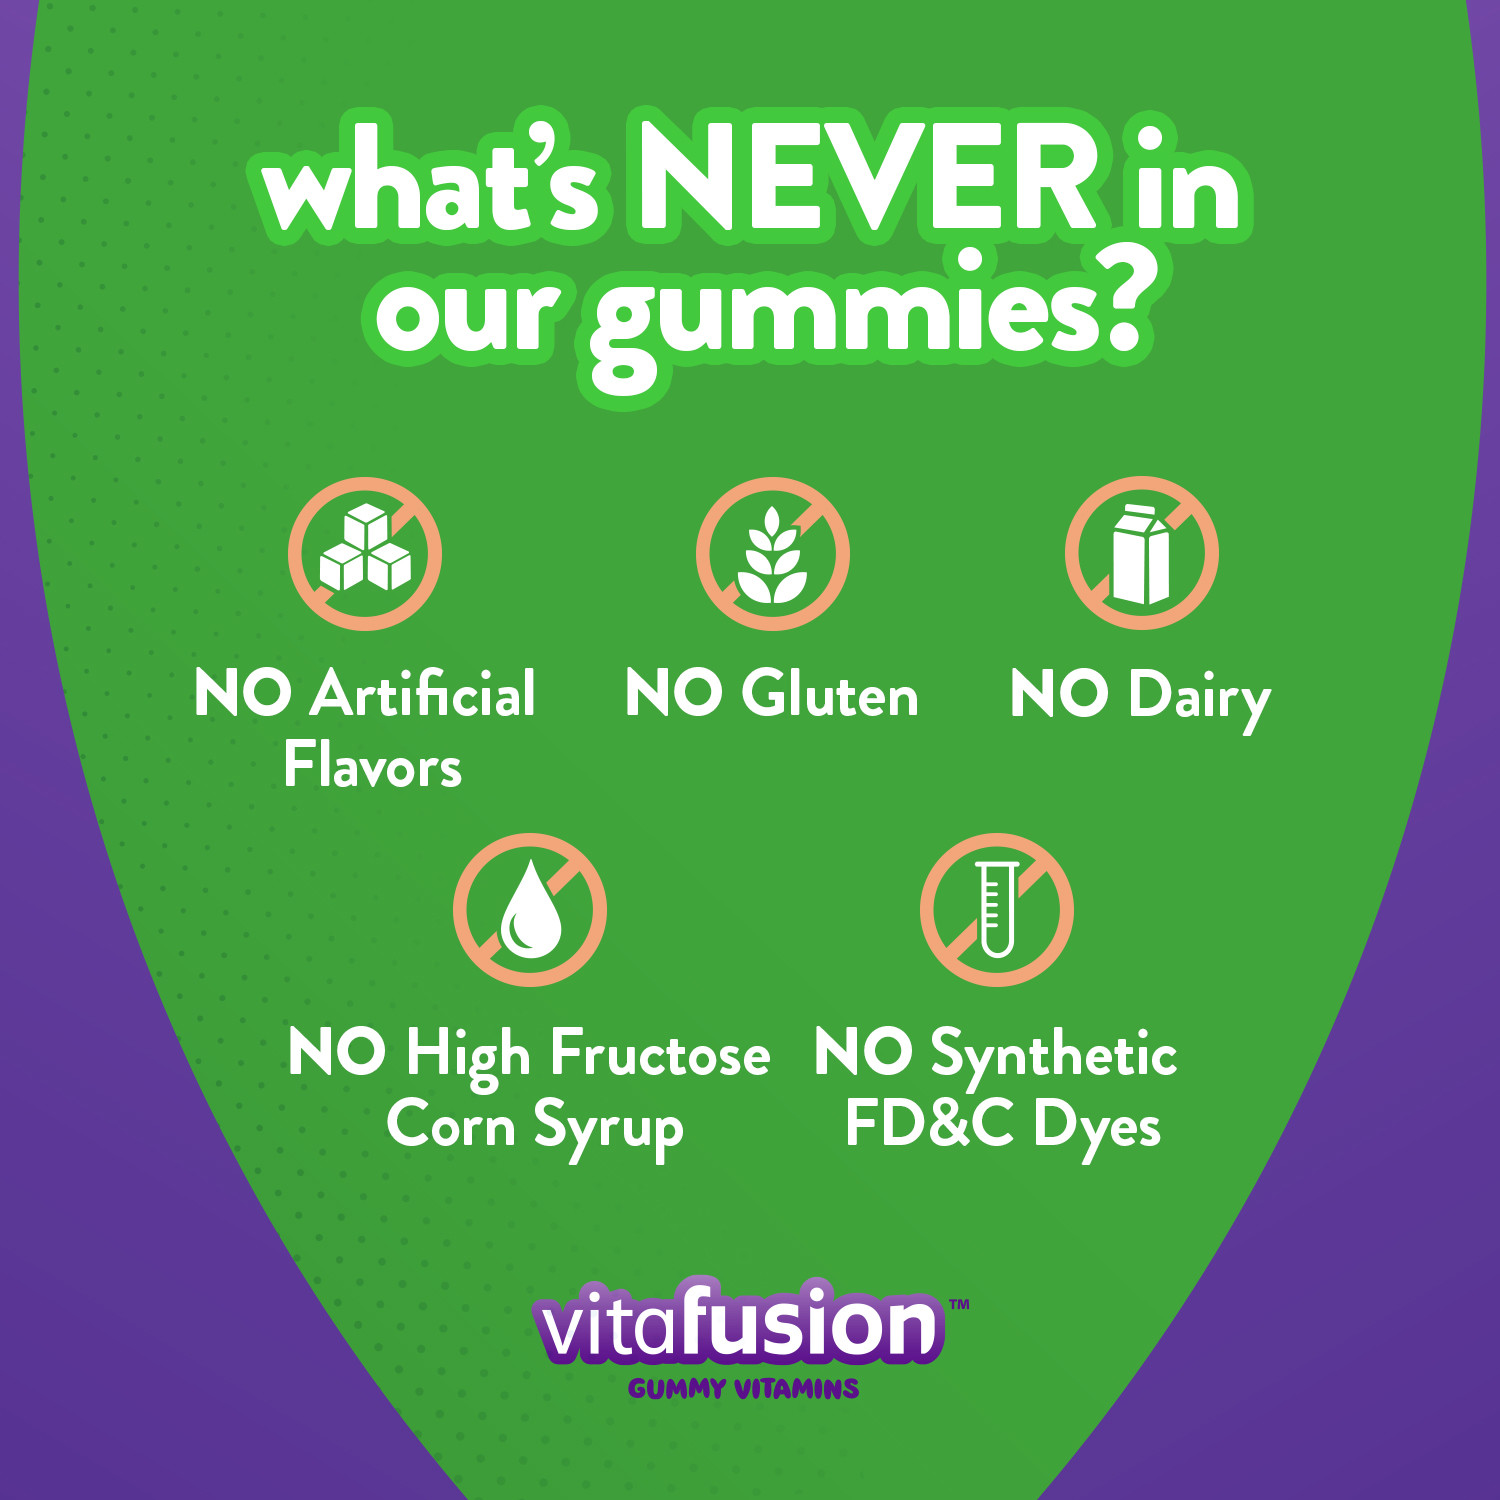 vitafusion Women’s Daily Gummy Multivitamin: vitamin C & E, Delicious Berry Flavors, 70ct (35 day supply), from Vitafusion, the gummy vitamin experts. - image 5 of 9